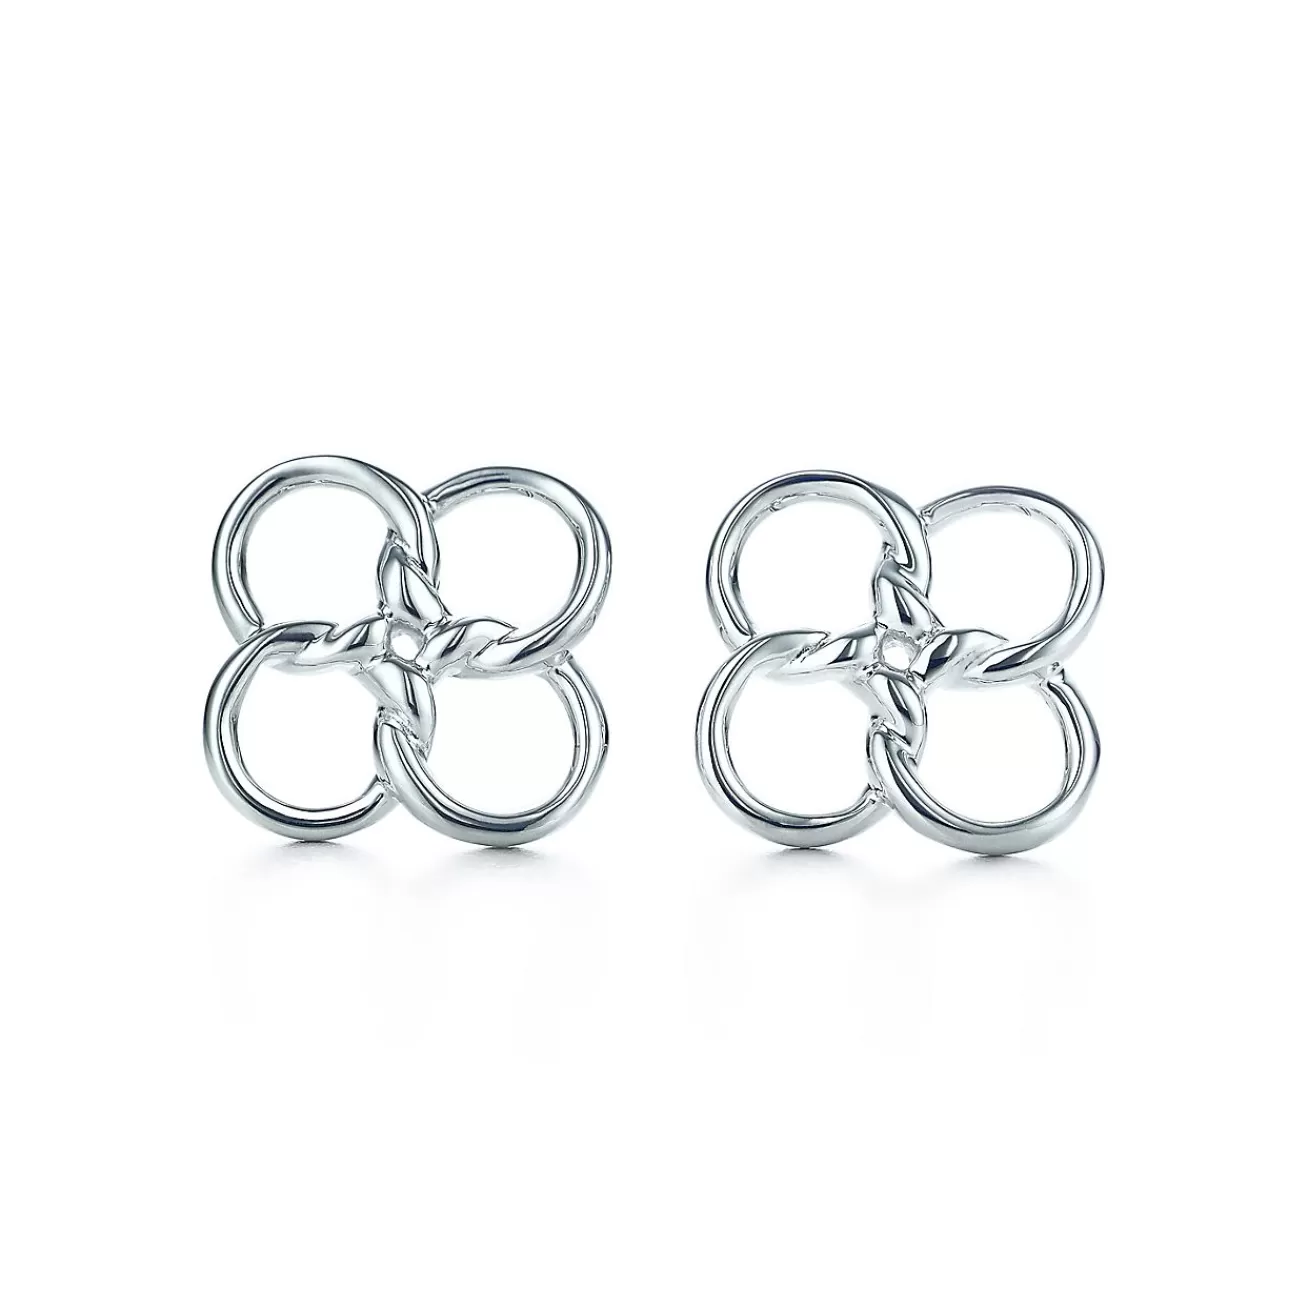 Tiffany & Co. Elsa Peretti® Quadrifoglio™ earrings in sterling silver. | ^ Earrings | Sterling Silver Jewelry